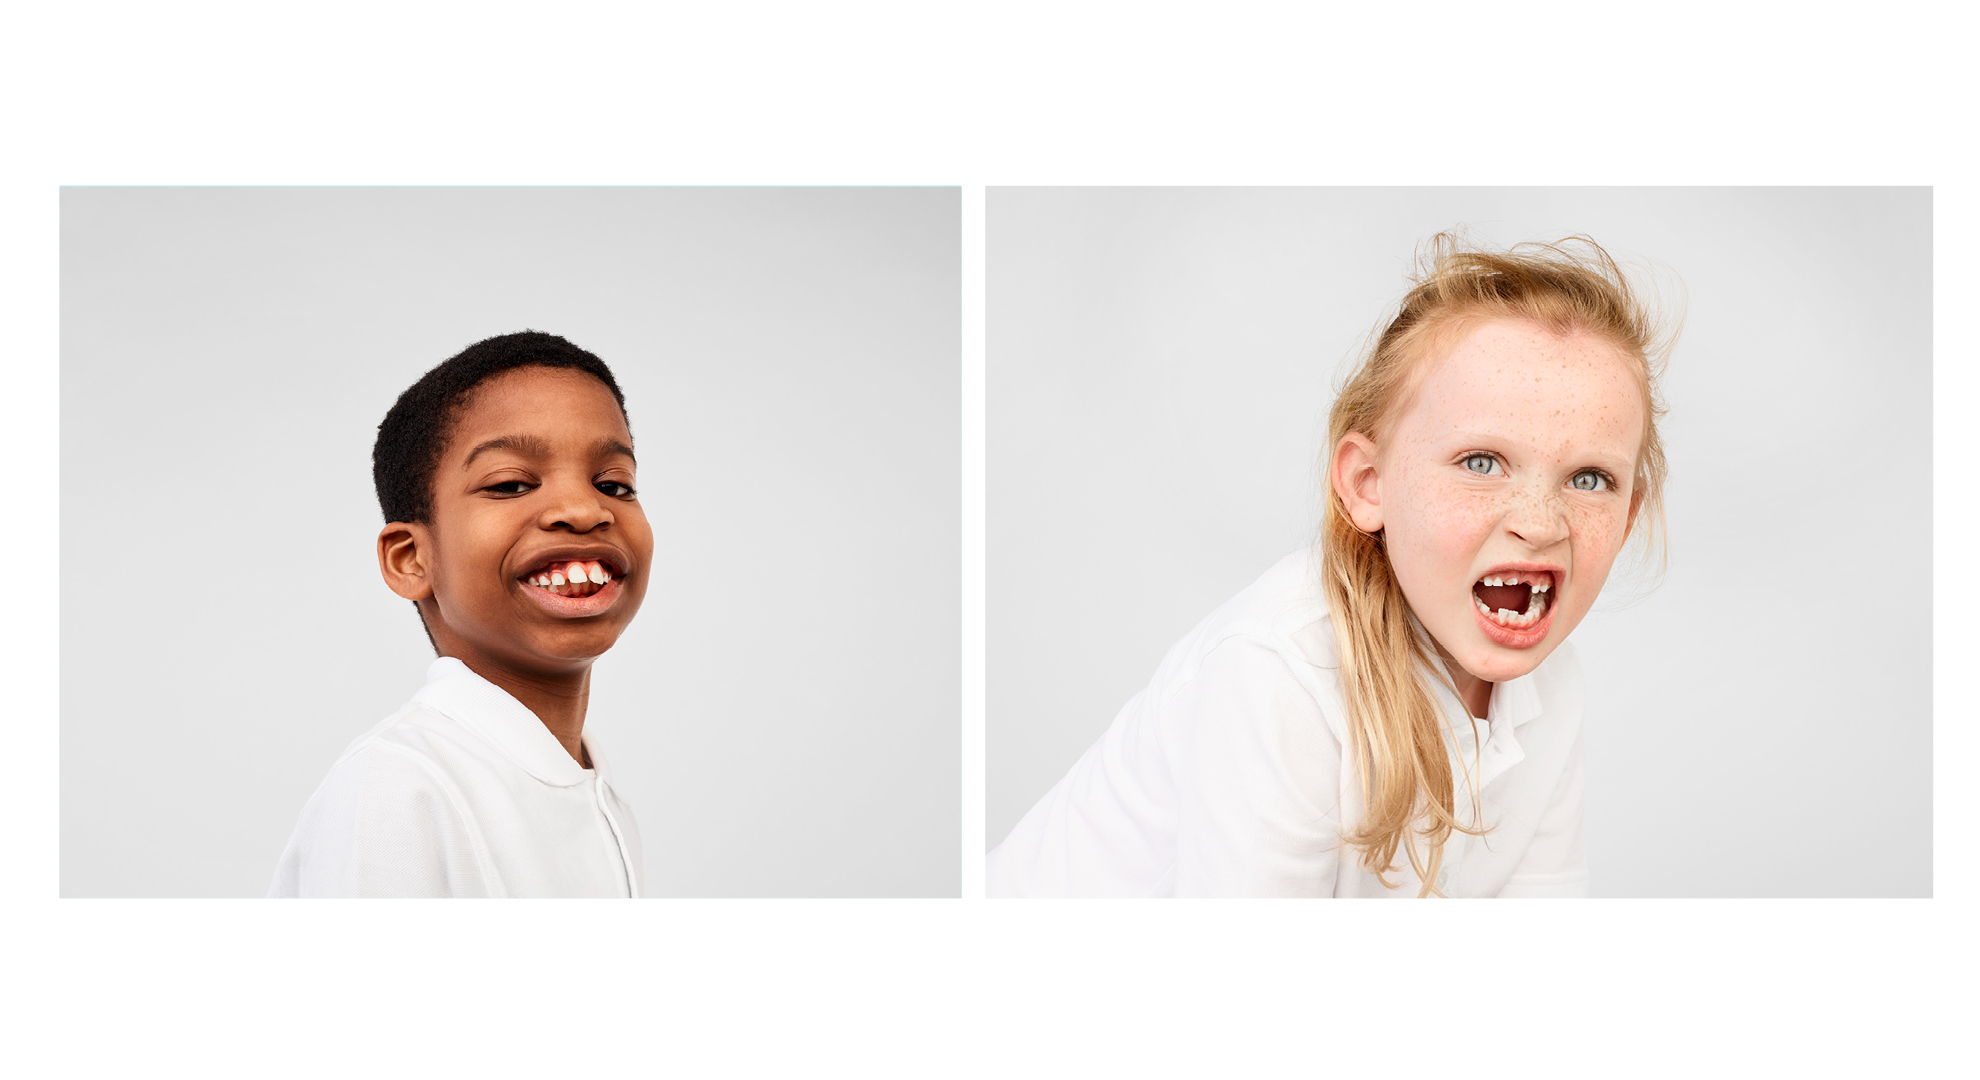 Rankin gets his teeth into dental hygiene photo campaign for children